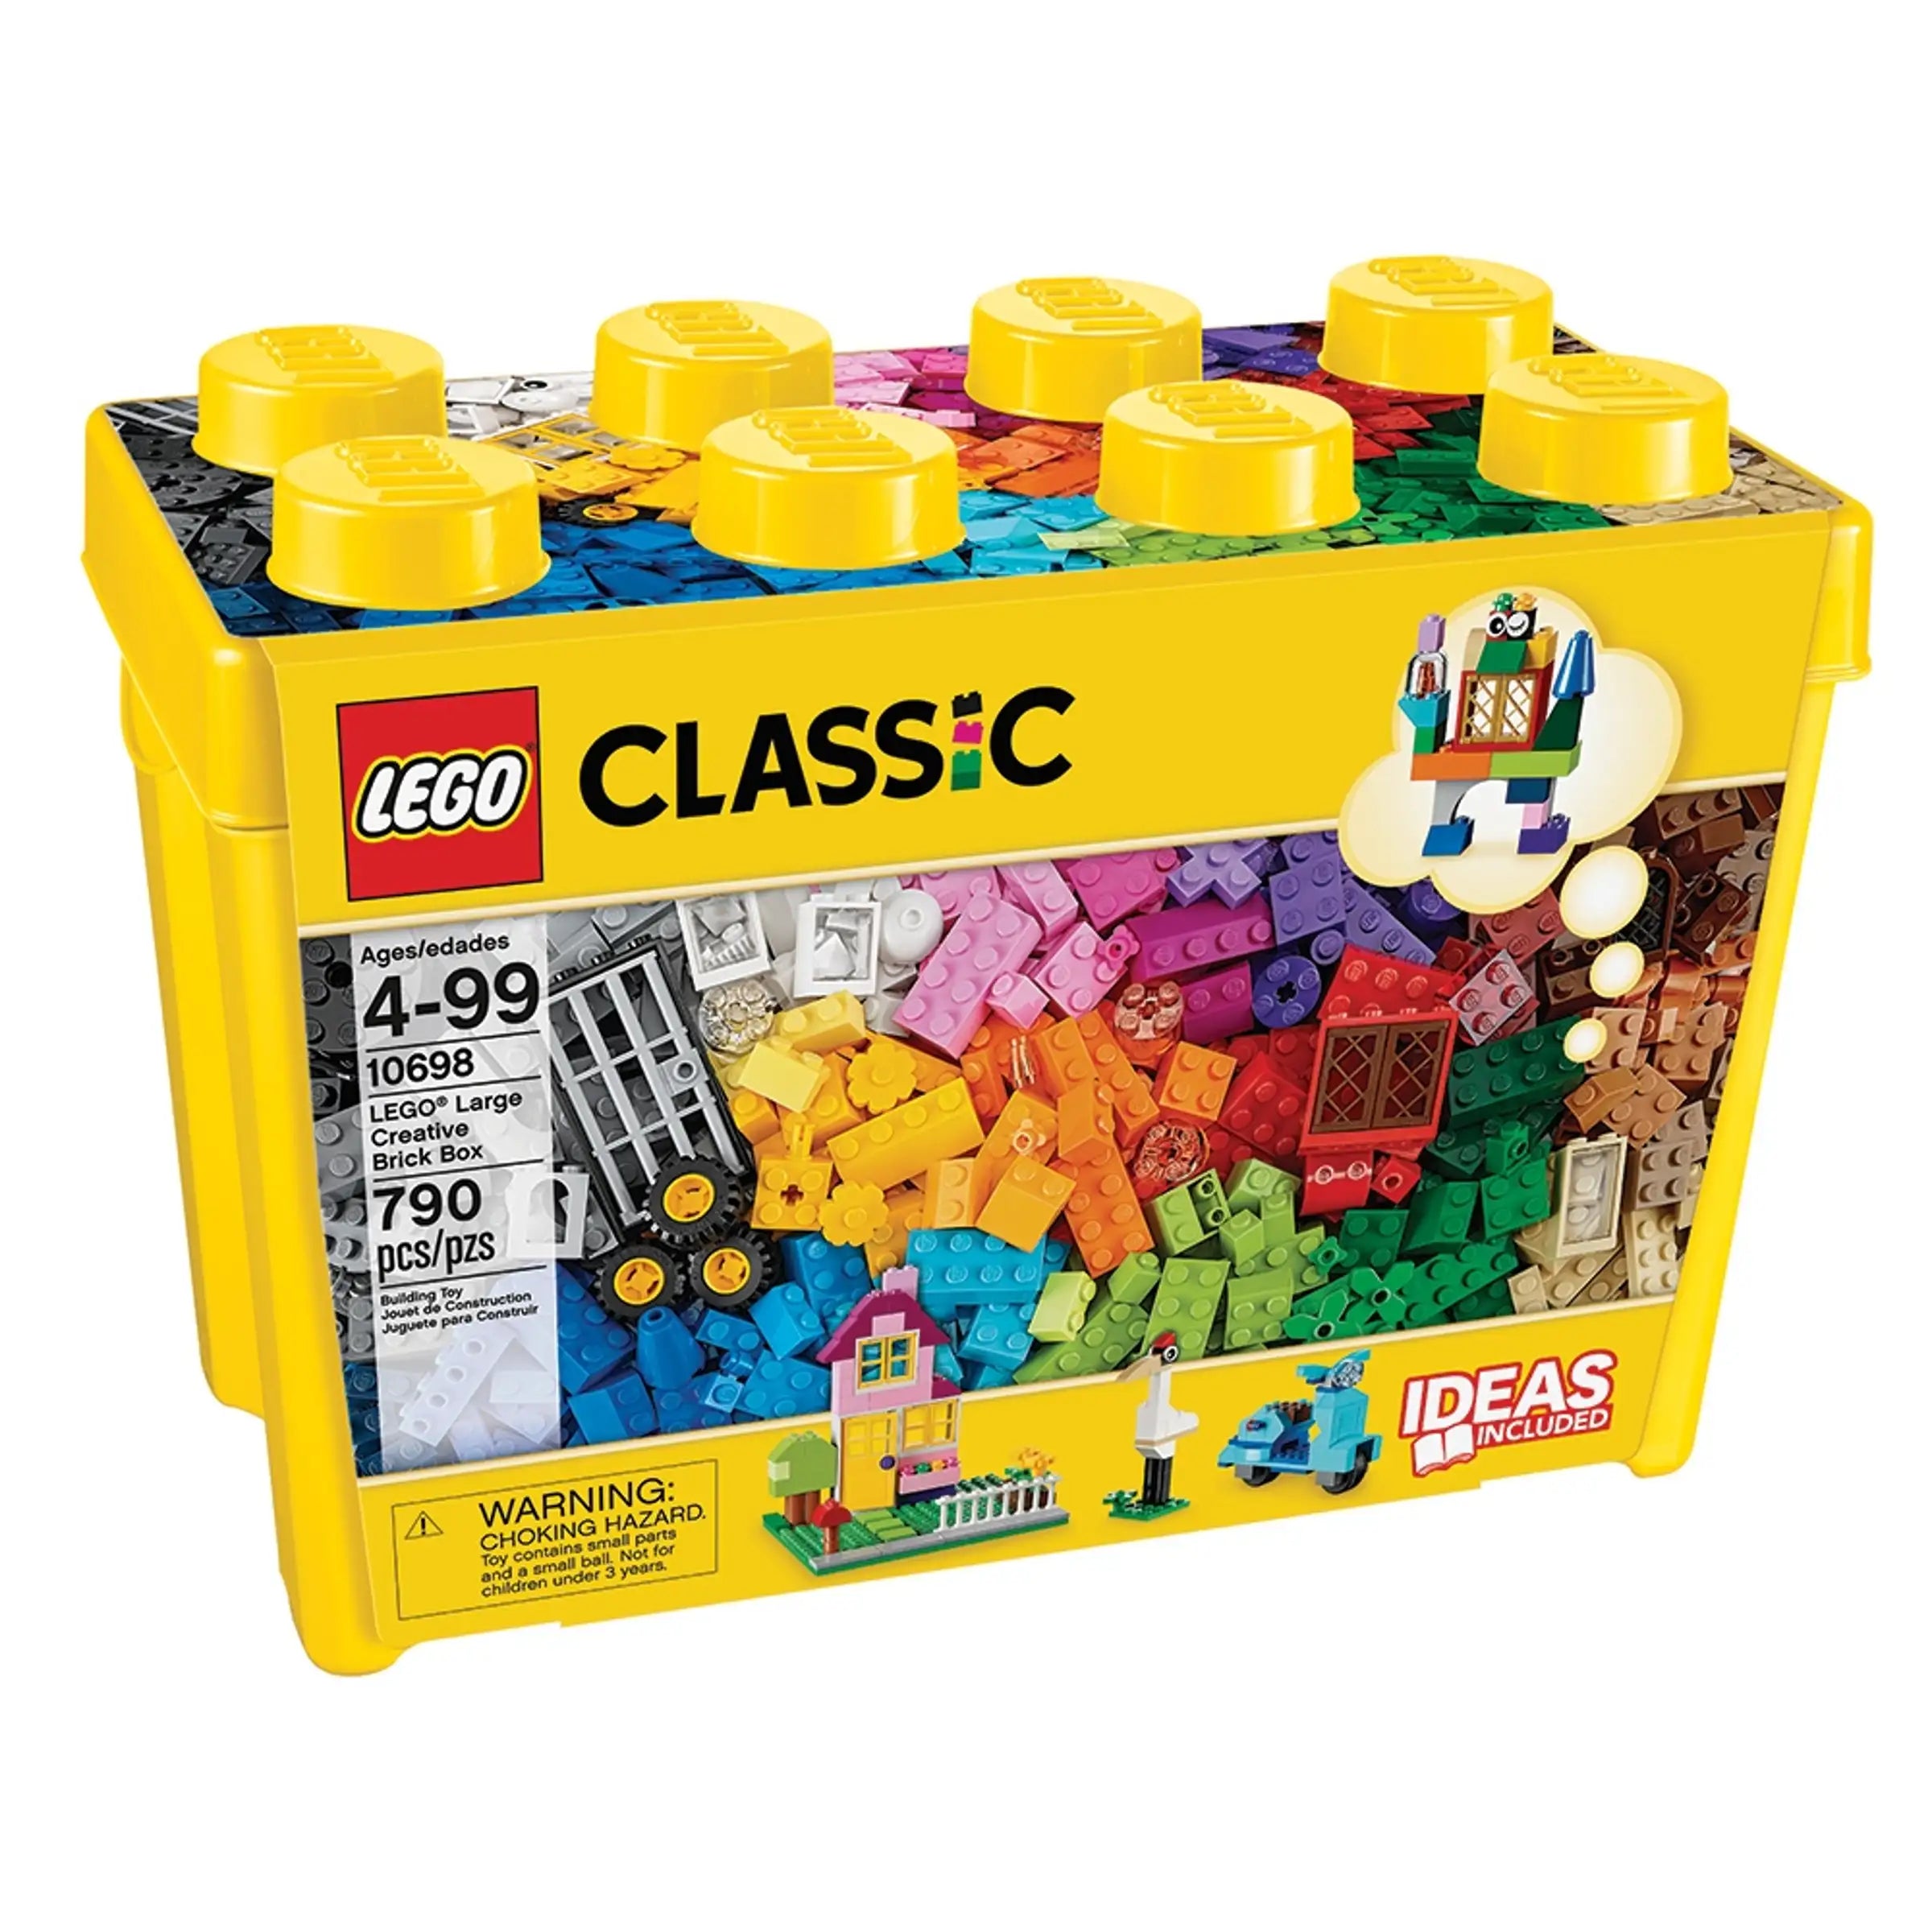 Lego - The big box of LEGO® creative bricks